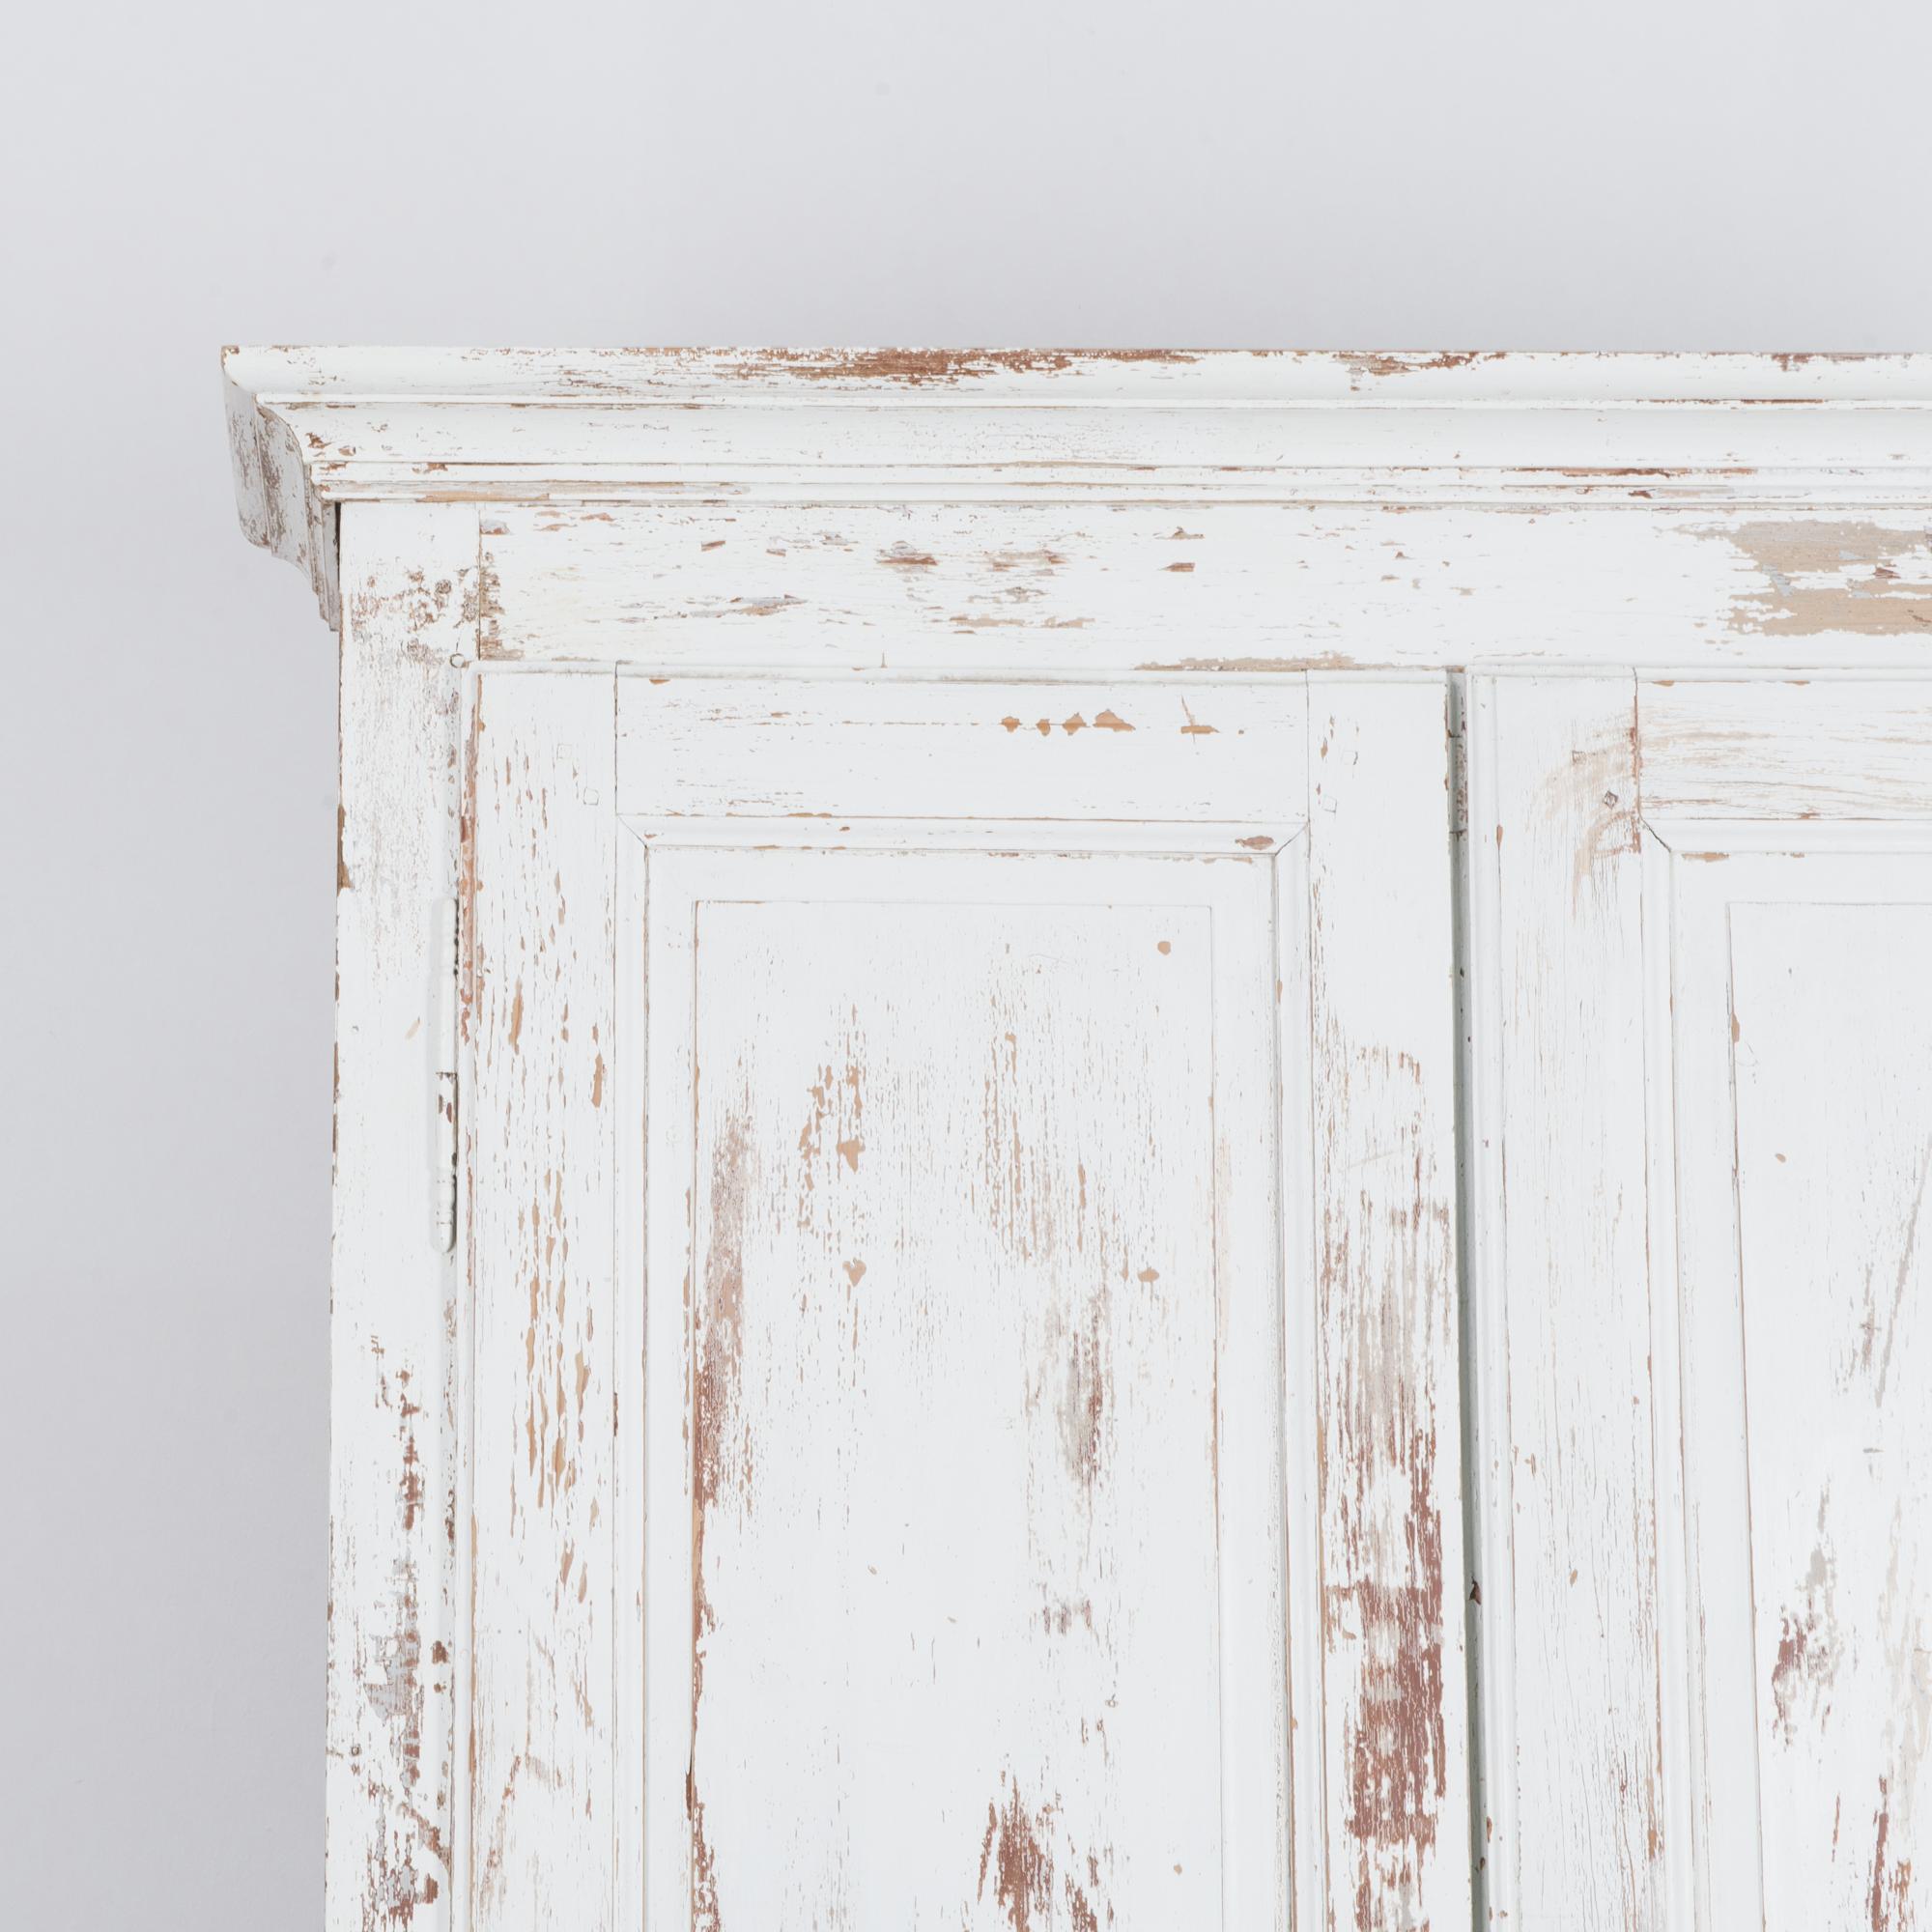 white french armoire